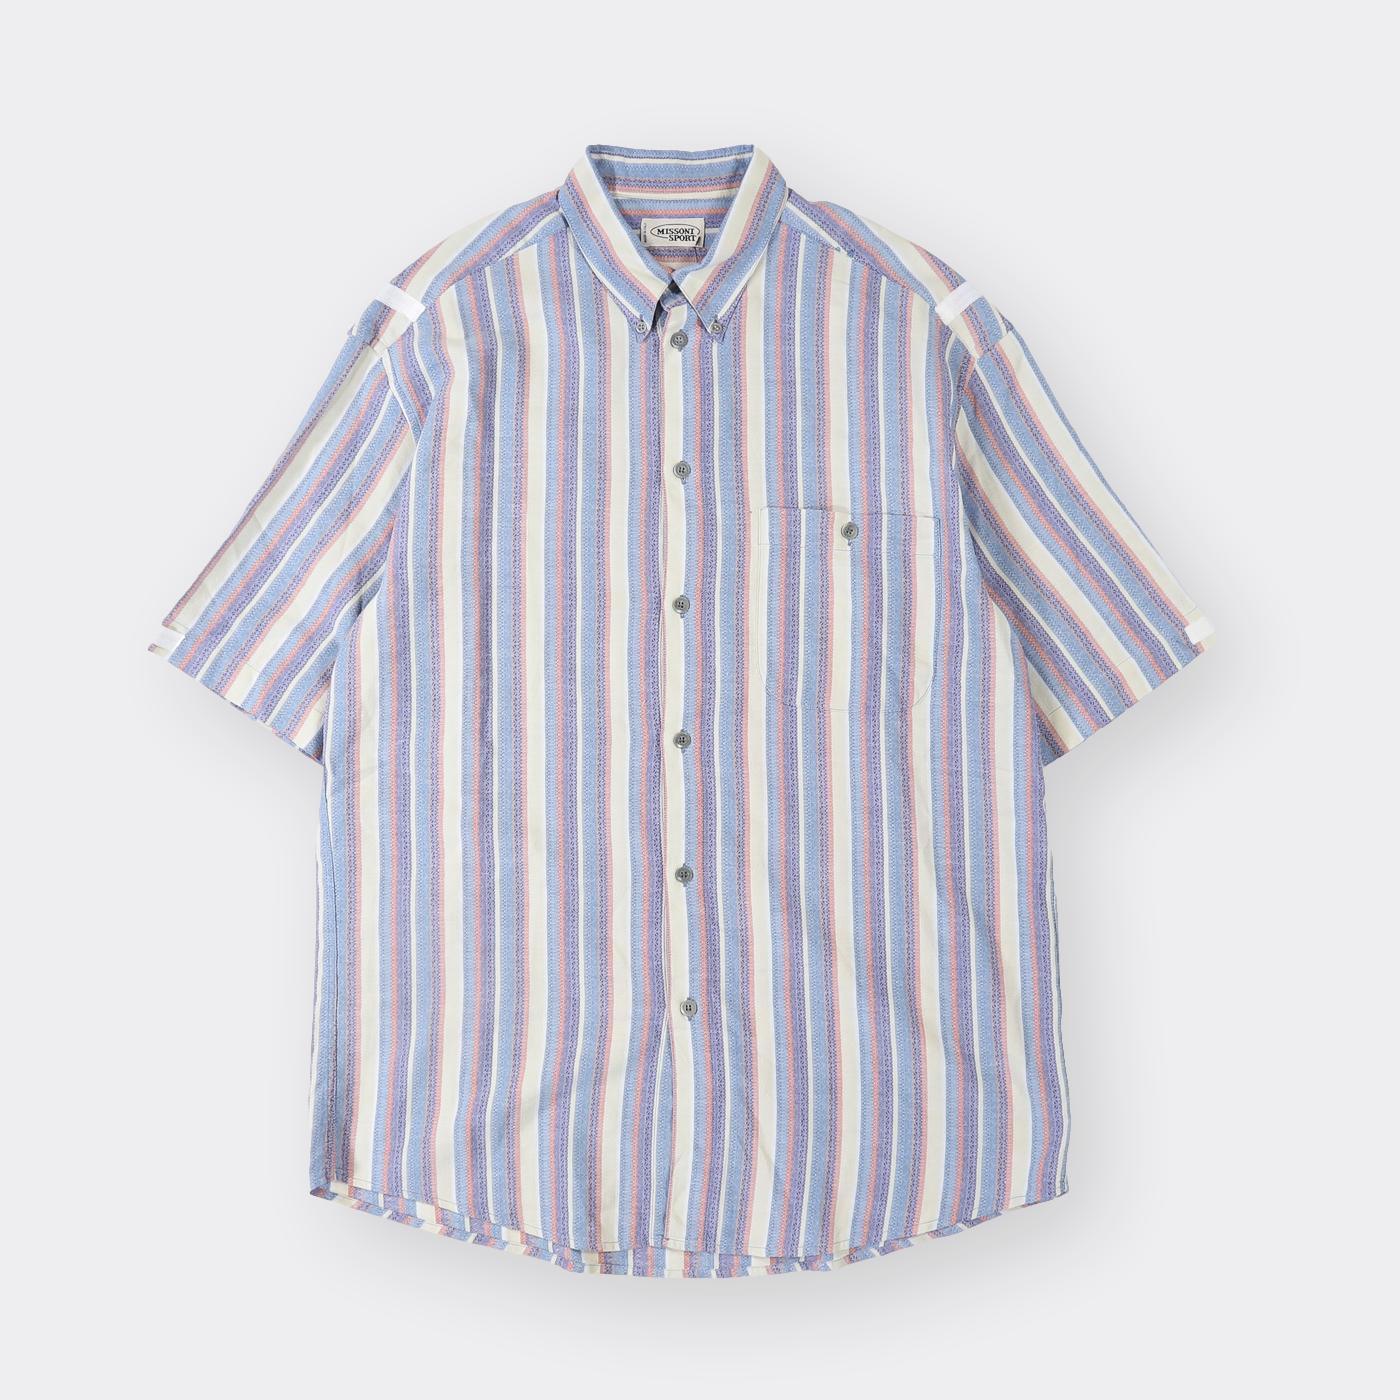 Missoni Vintage Shirt - XL - Known Source